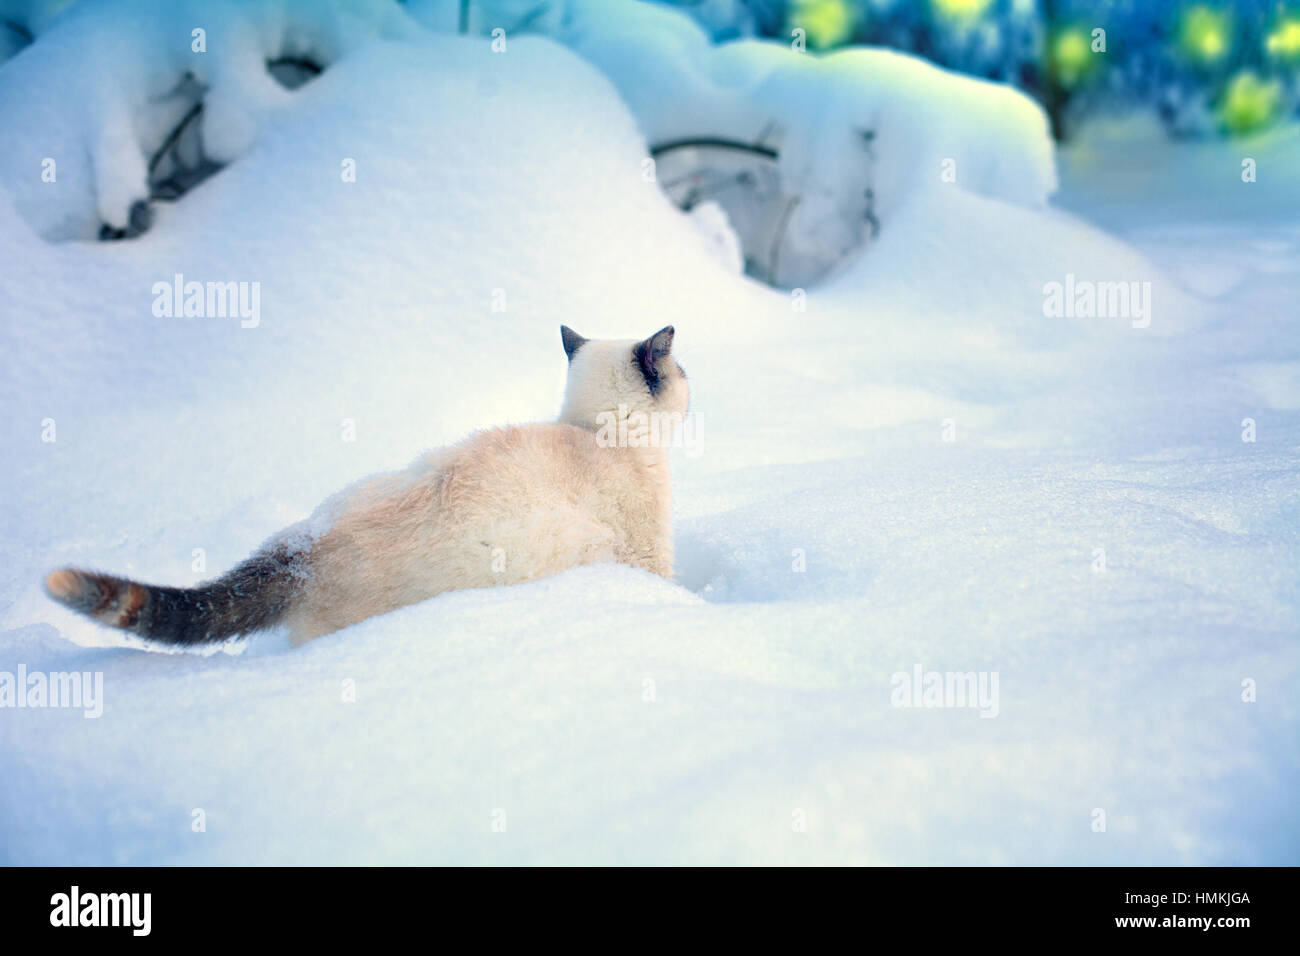 Cat walking in snow Stock Photo